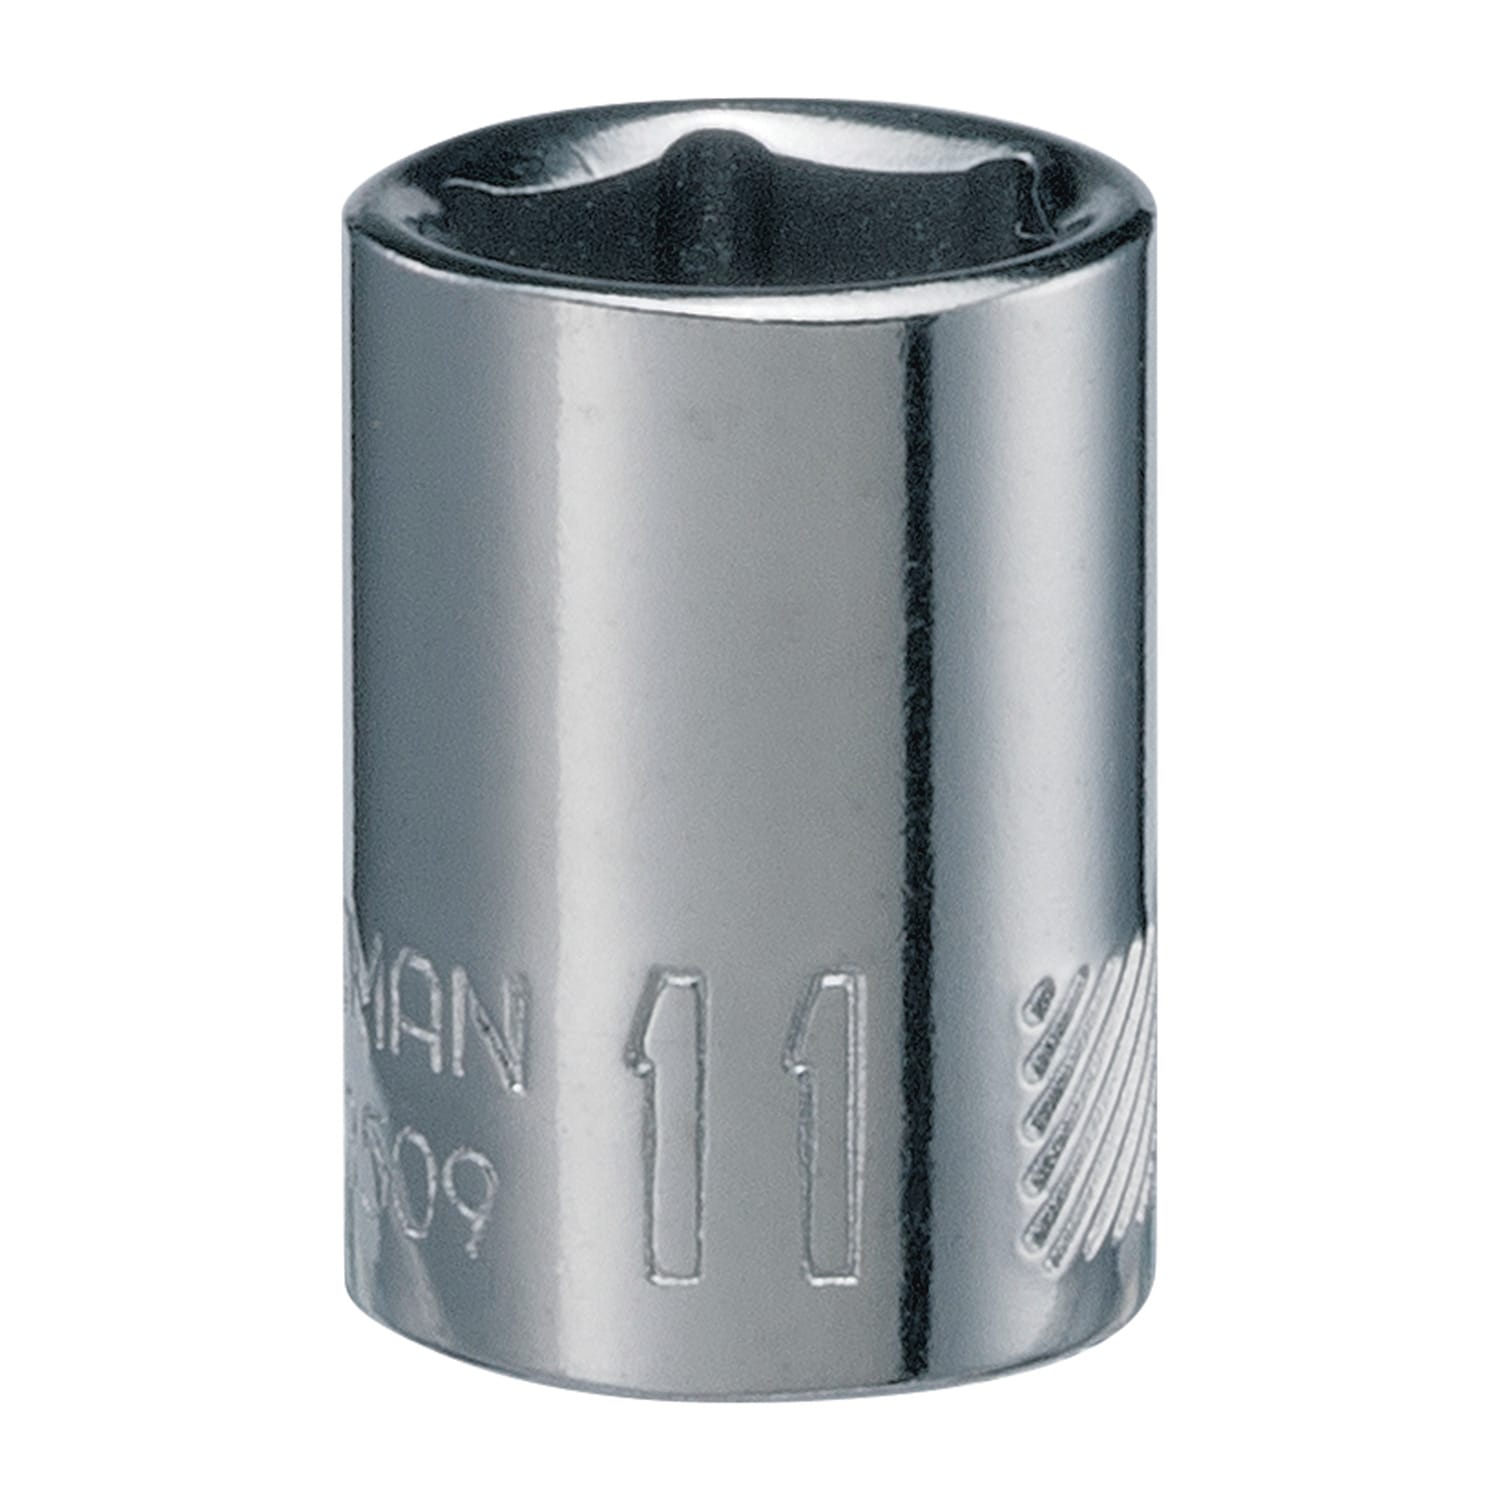 NEW APEX USA 11 mm Socket 1/4" Sq Drive x 1" Lg Magnet # M-11mm11 6 Pt NOS 